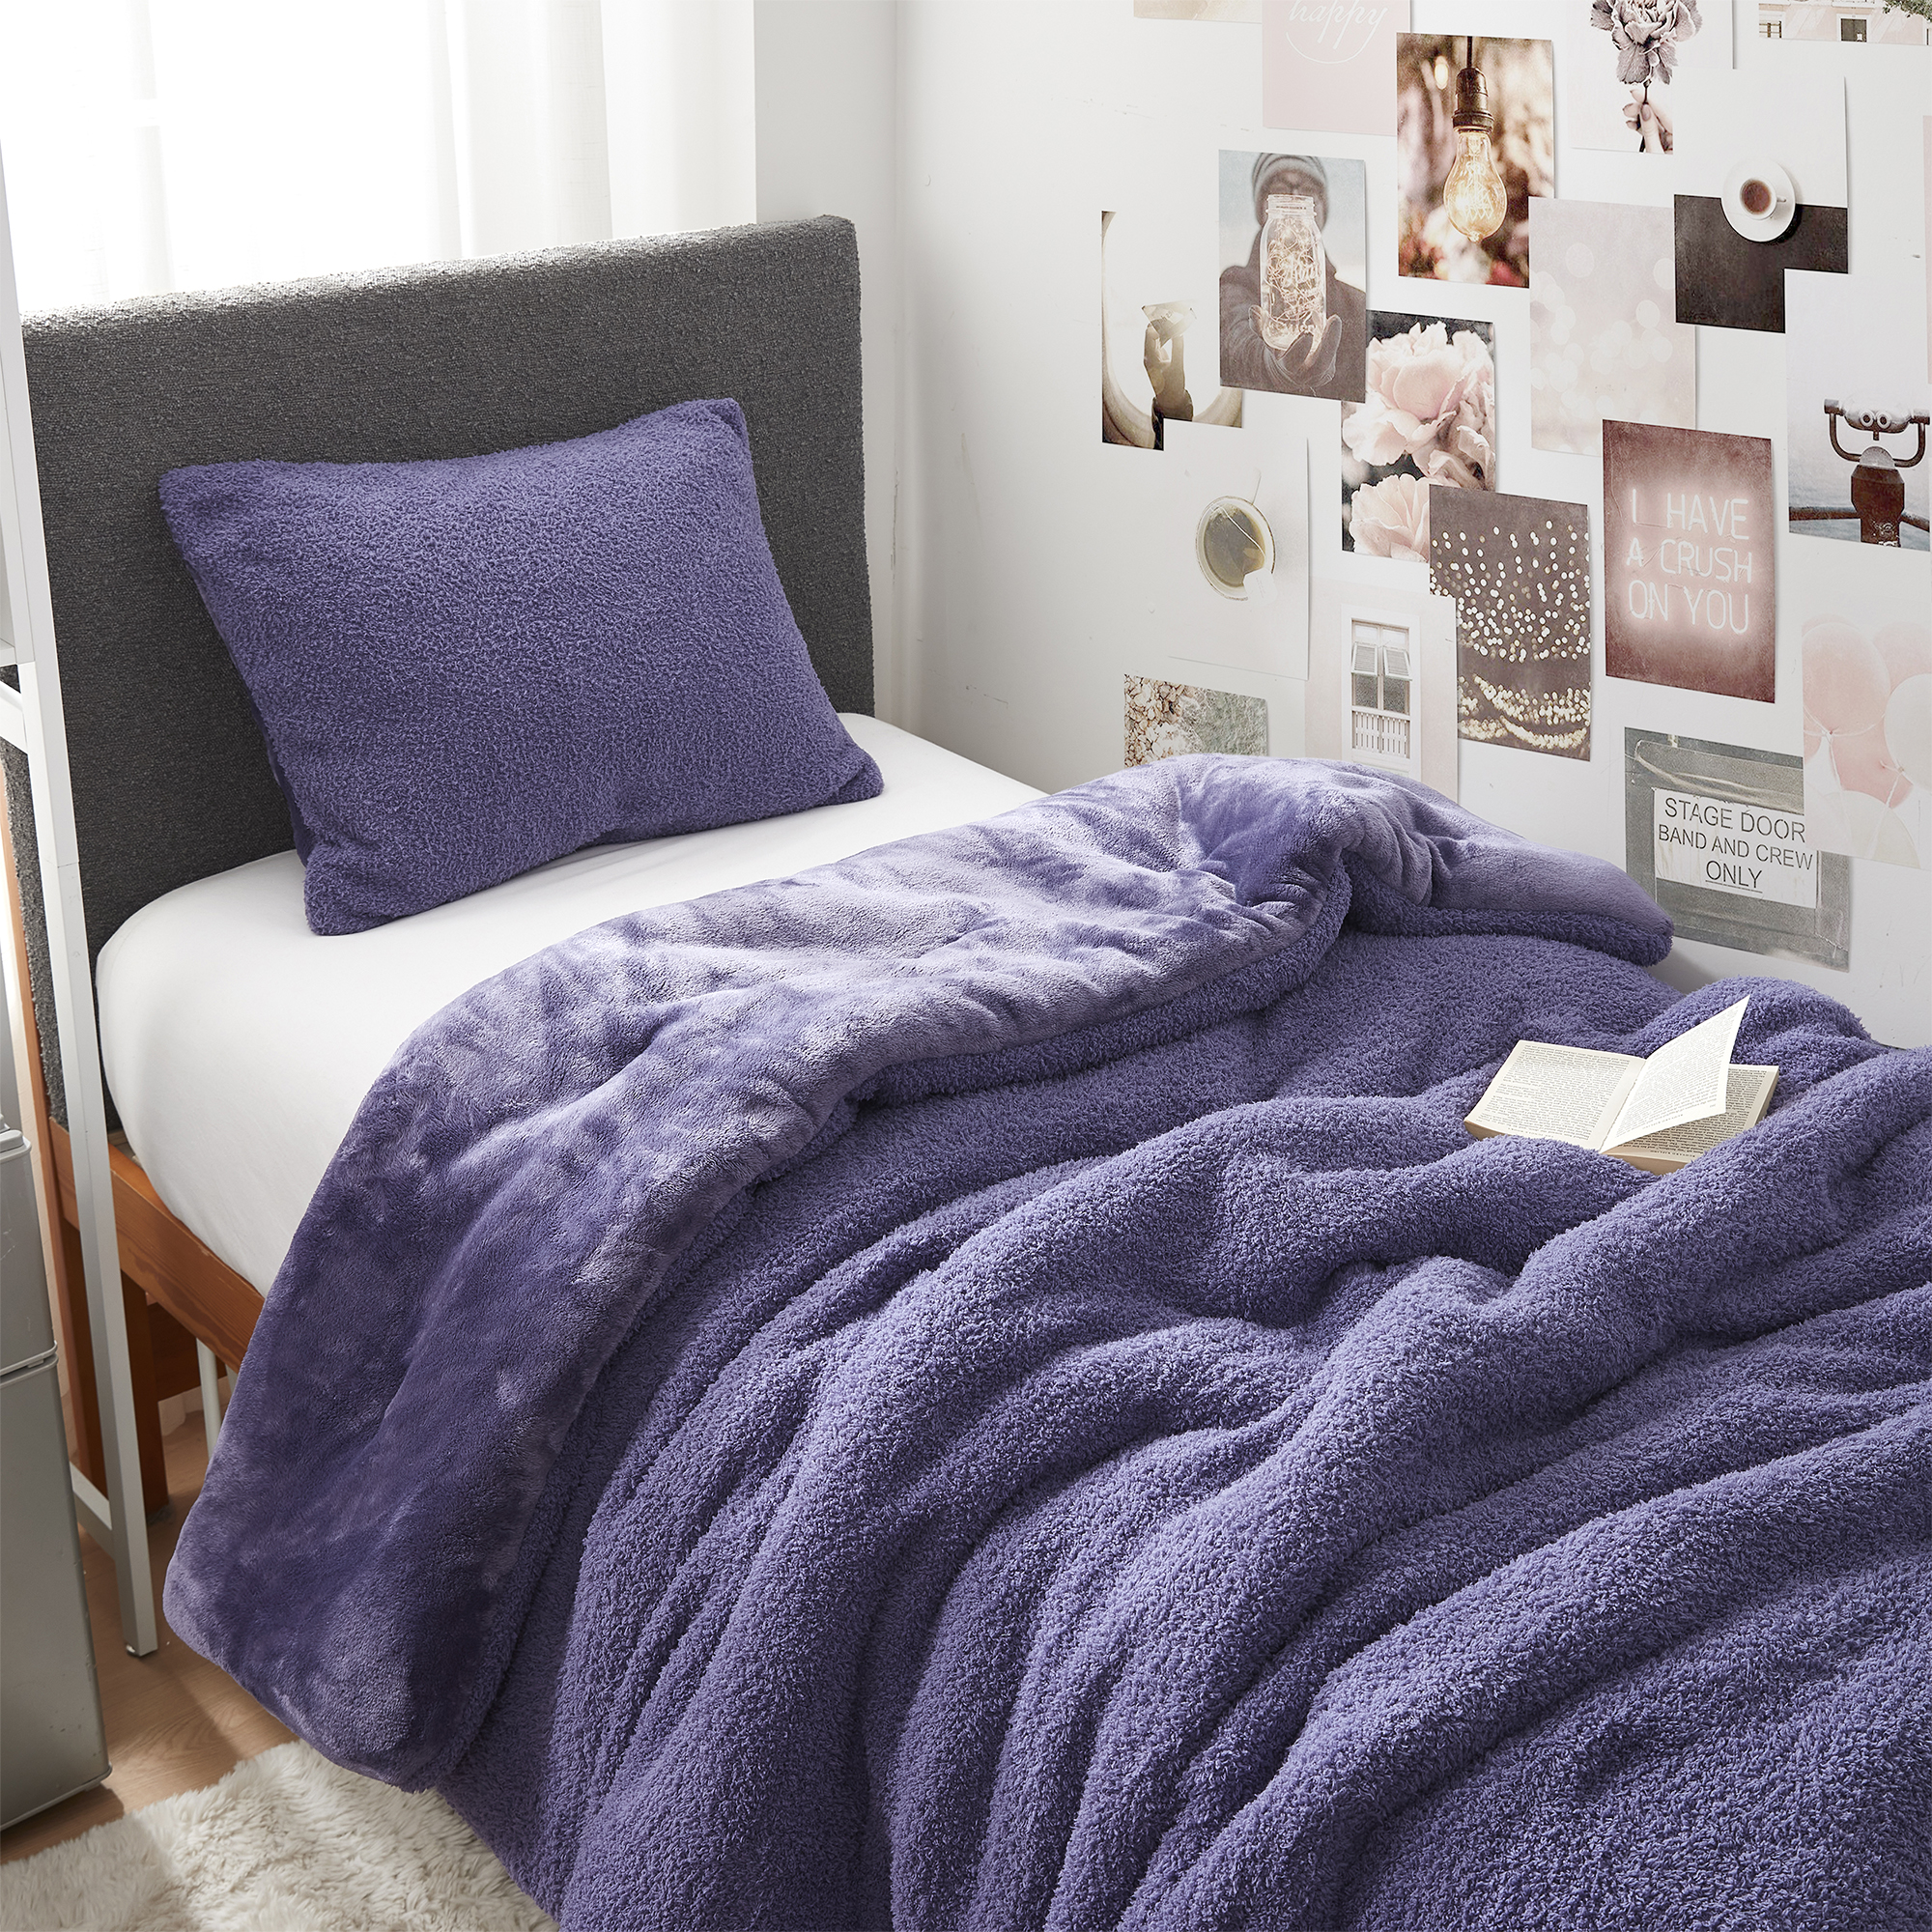 Cardigan Knit - Coma Inducer® Oversized Twin Comforter - Blueberry Purple